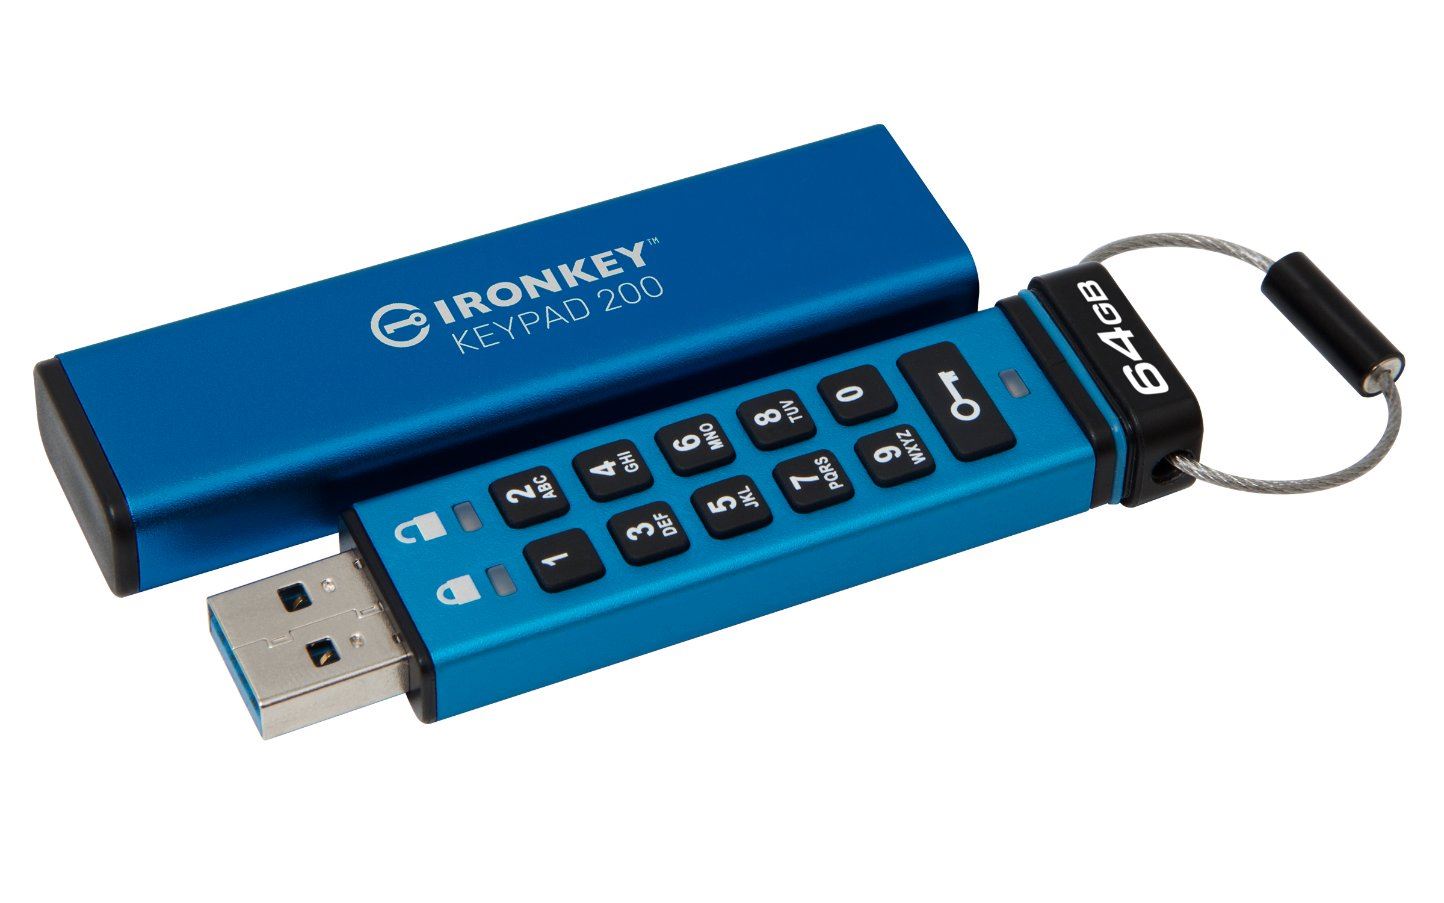 Kingston Flash Disk IronKey 64GB Keypad 200 encrypted USB flash drive3 